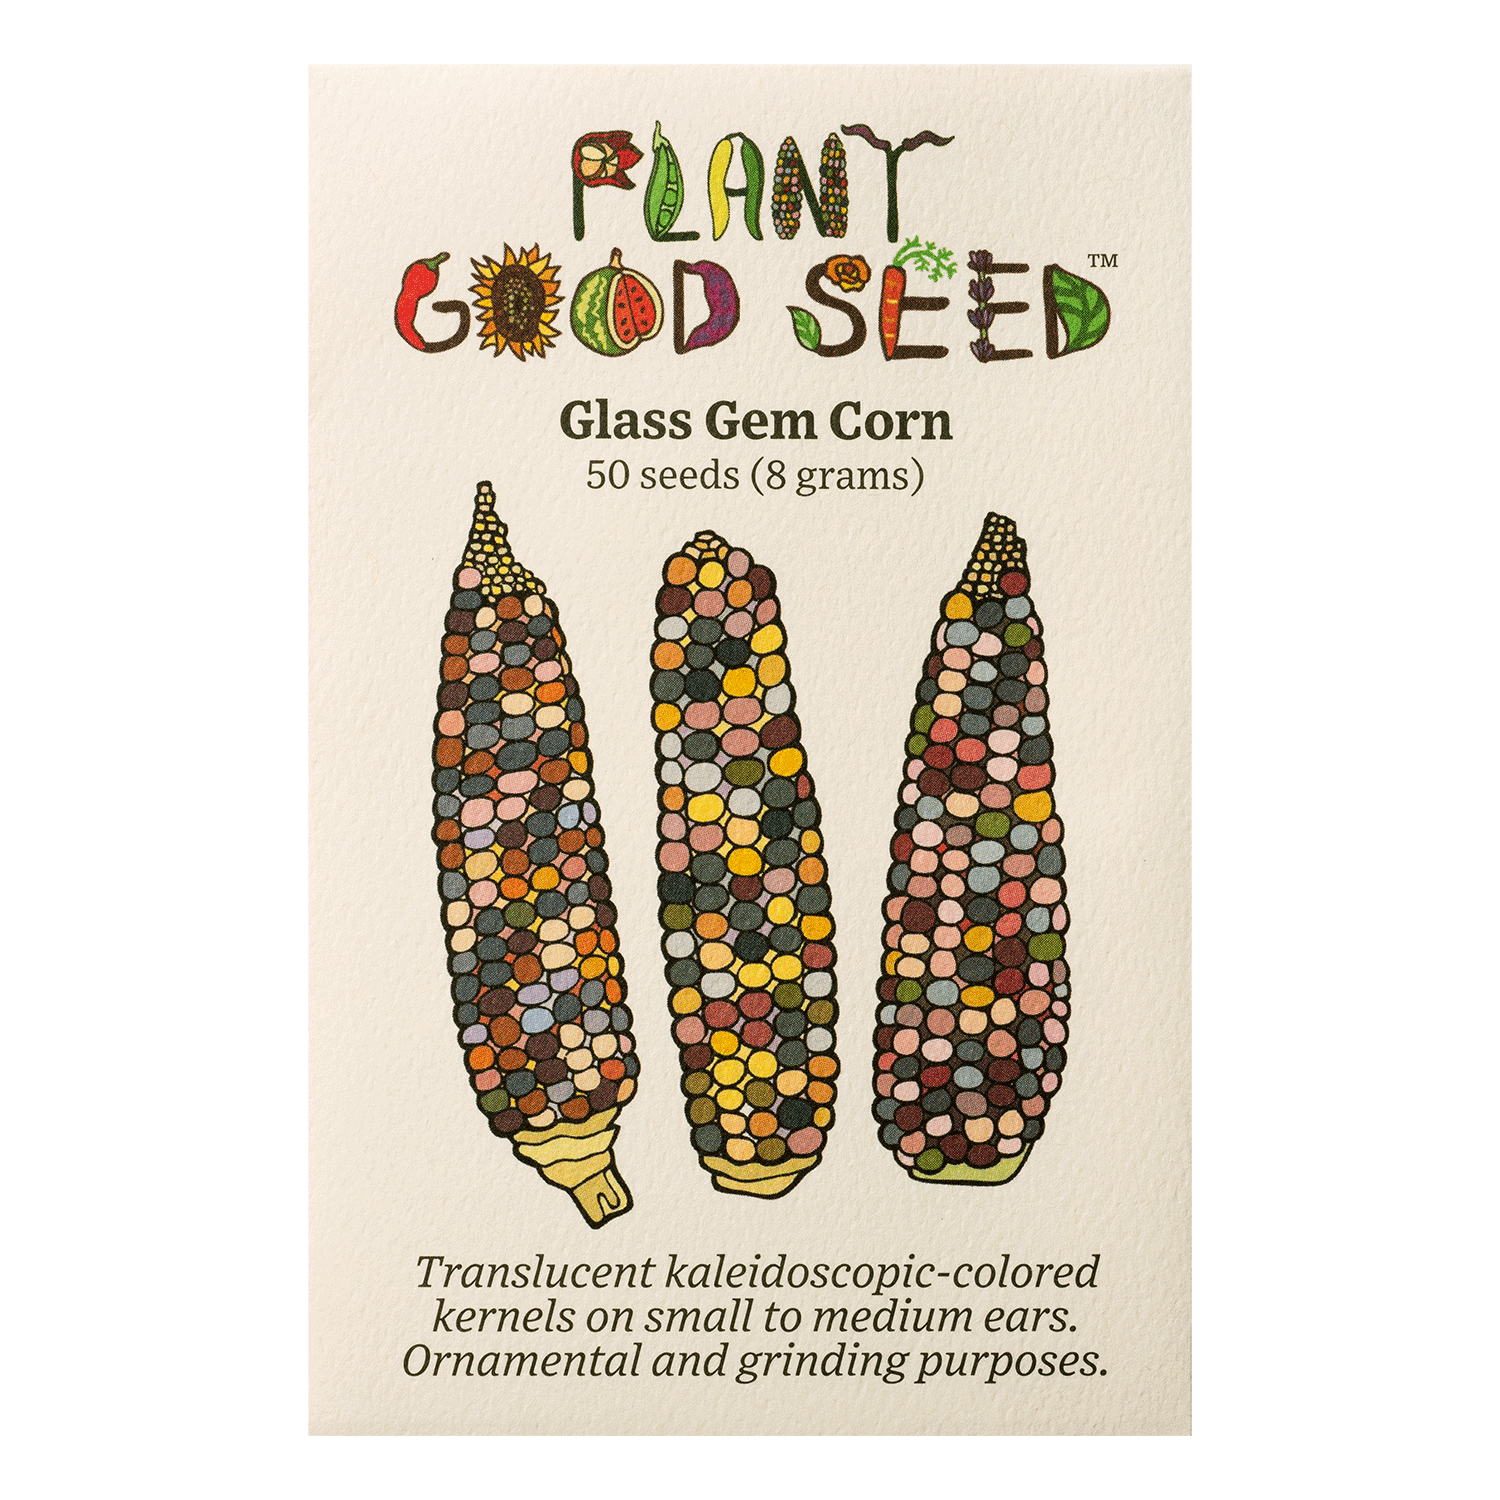 Glass Gem Corn Seed